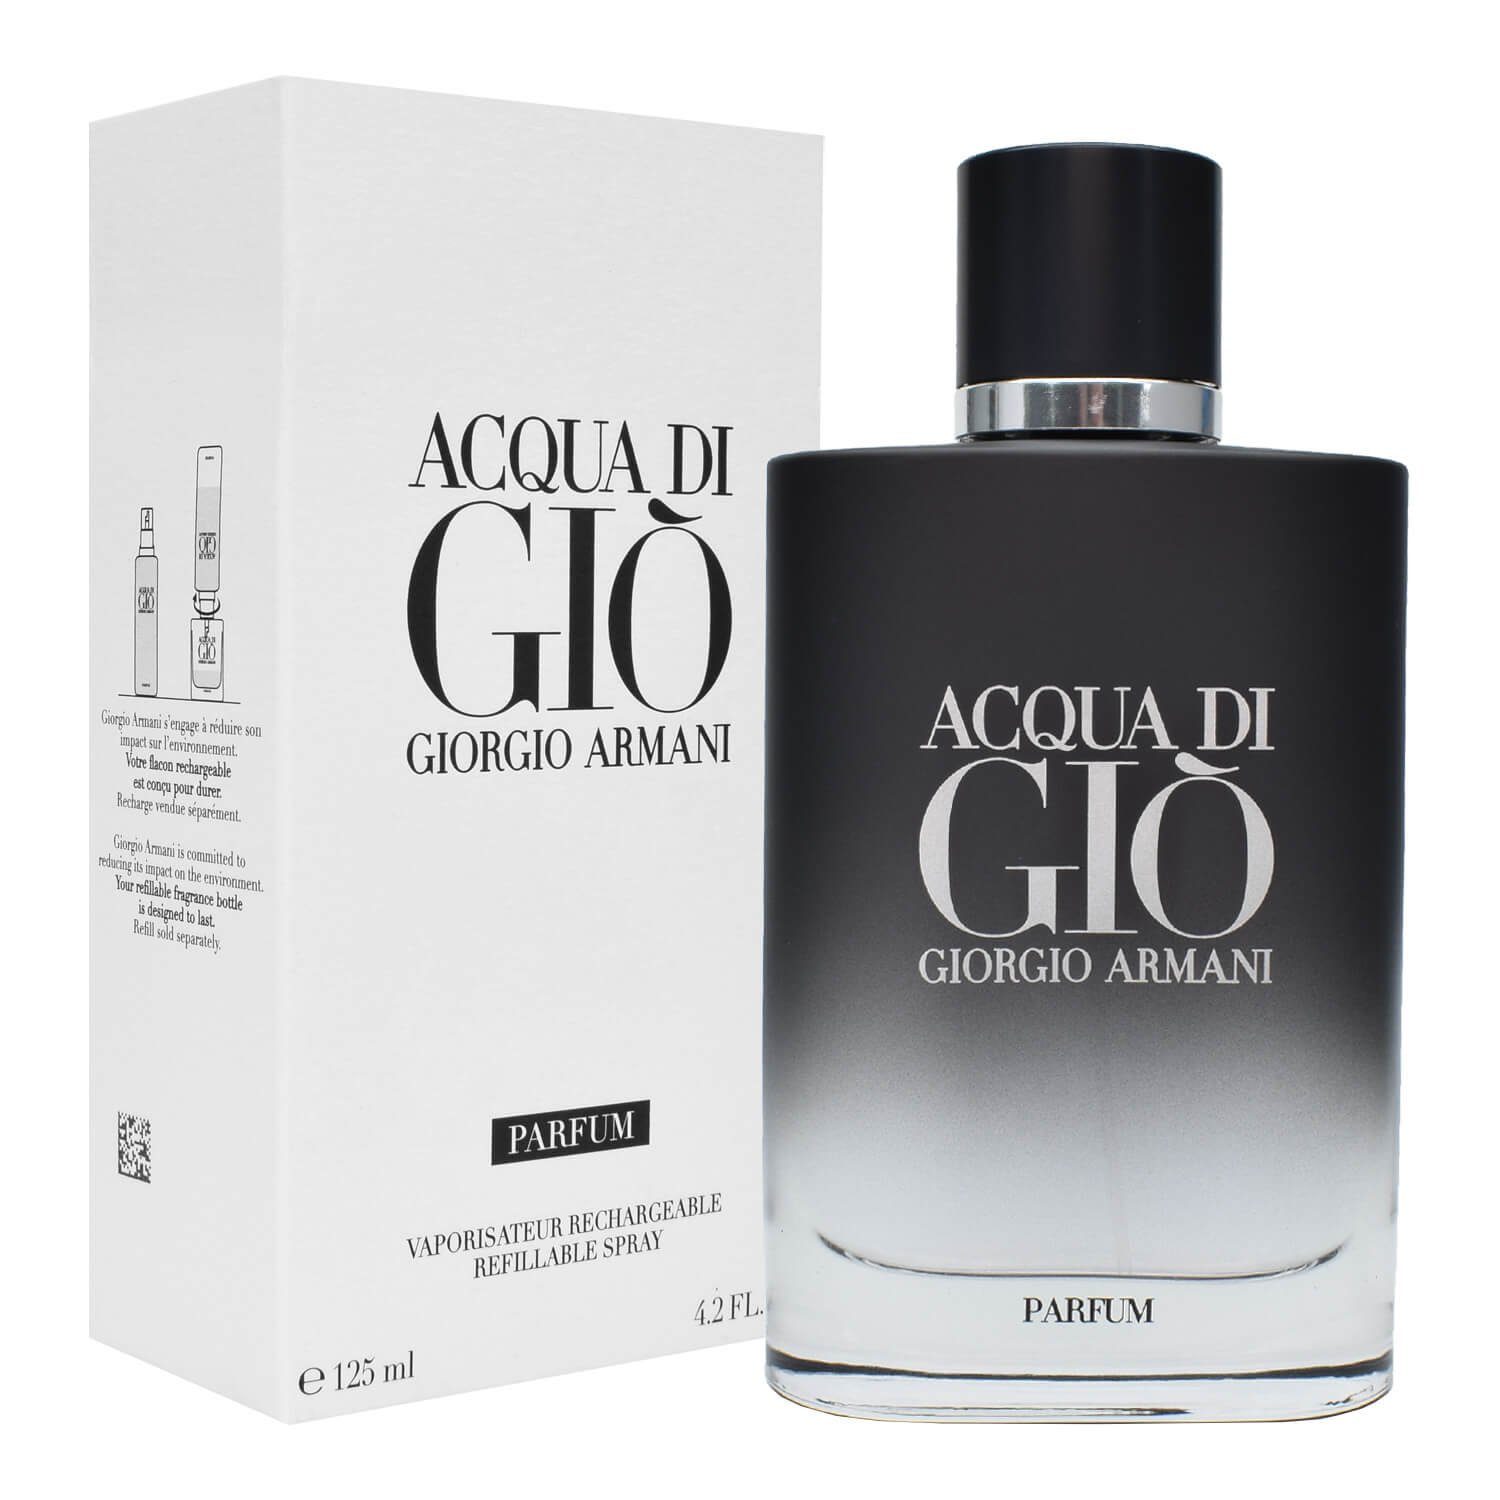 125 Acqua nachfüllbar Di ml, Extrait Homme Giorgio Armani Gio Parfum